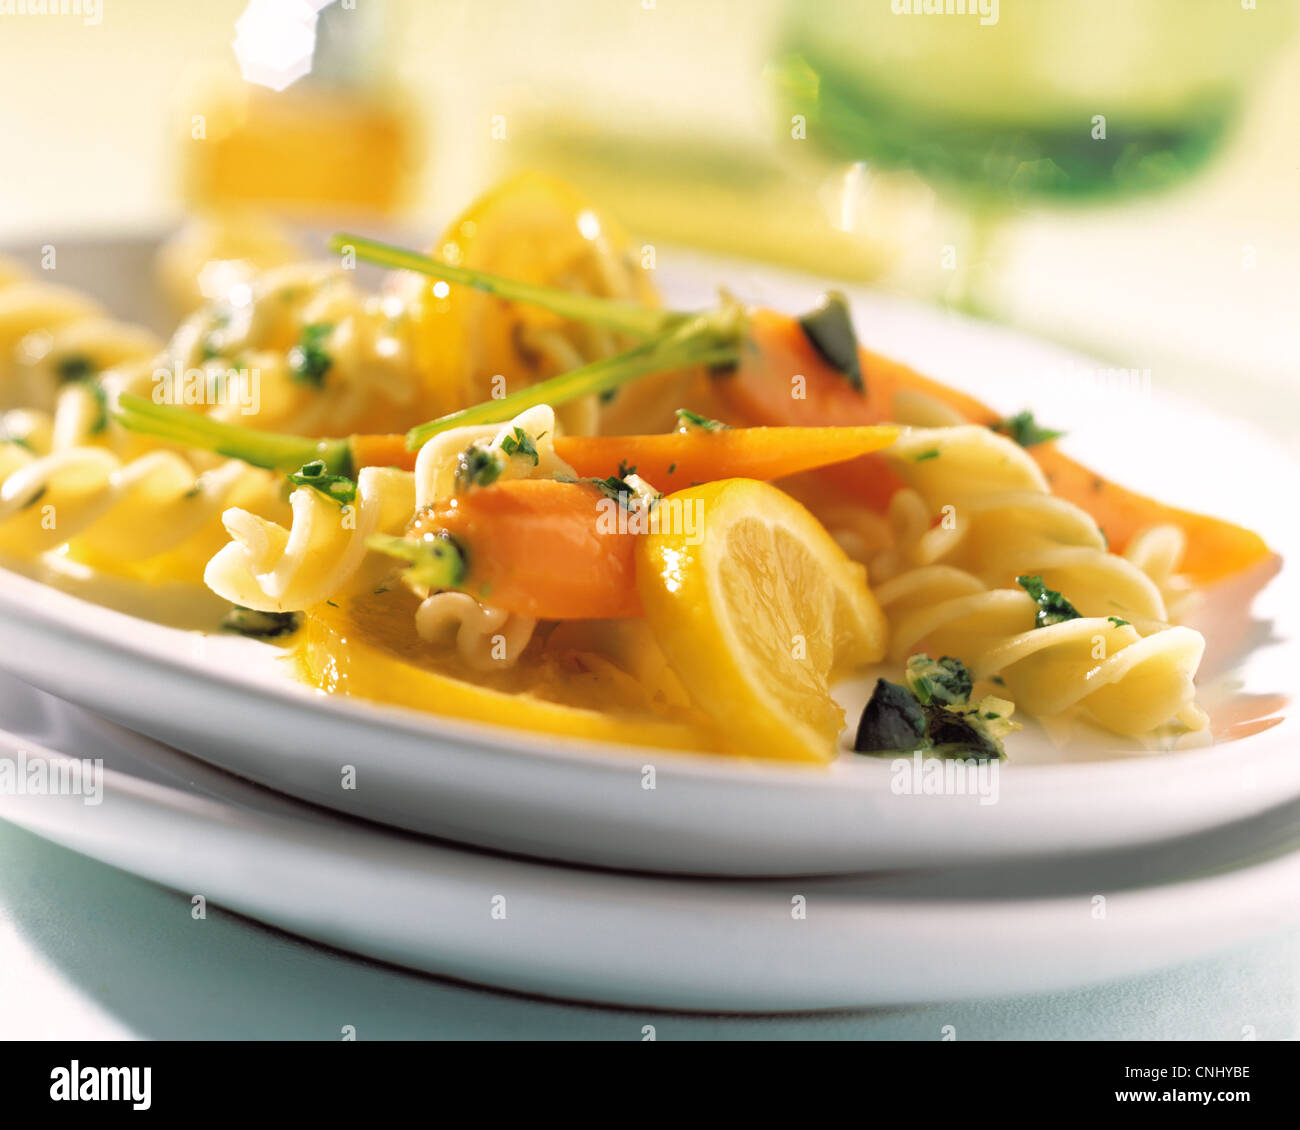 Fusili mit Pesto, Zitrone und Karotten Stockfotografie - Alamy